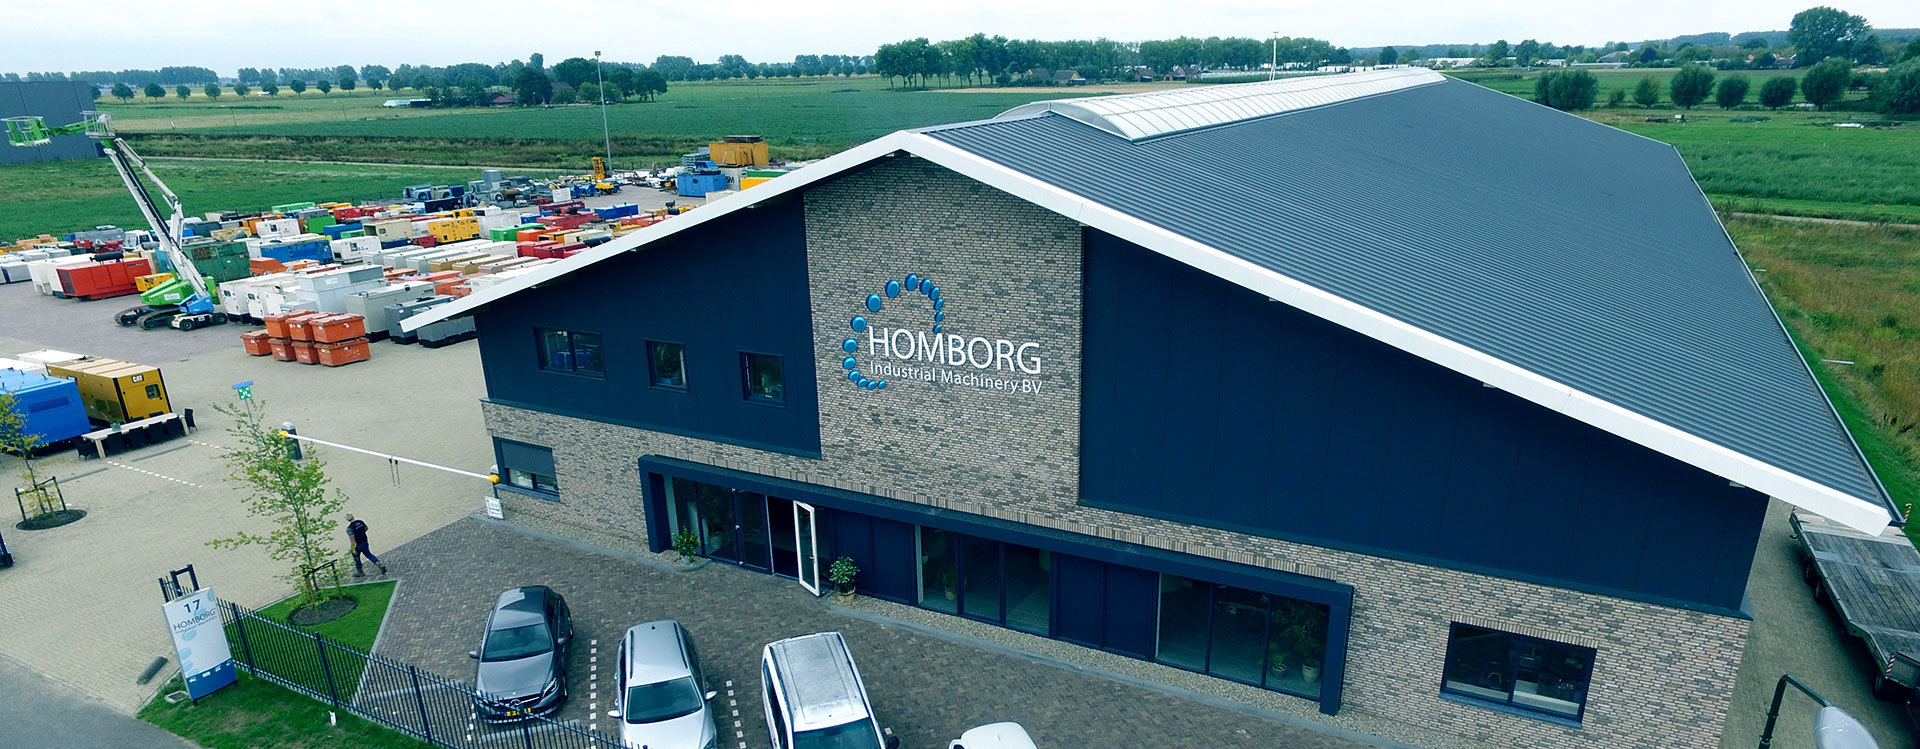 Homborg Industrial Machinery B.V.  - Matériels de manutention undefined: photos 1